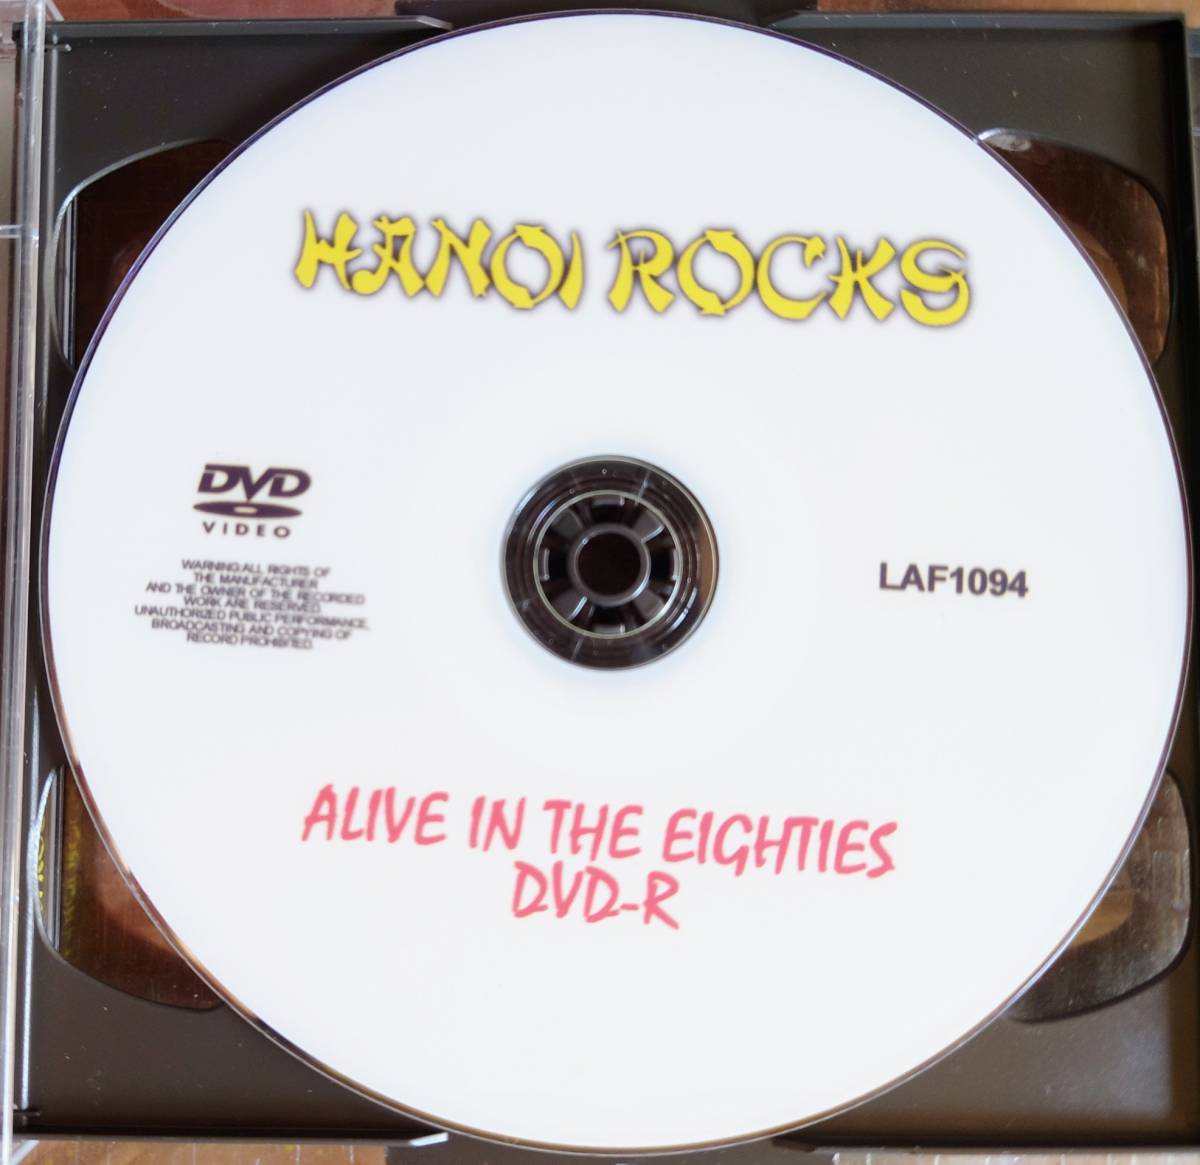 CD/DVD Hanoi Rocks - noi блокировка s/Alive In The Eighties (Limited 100 copies only)/Michael monroe Michael Monroe Anne ti mccoy 